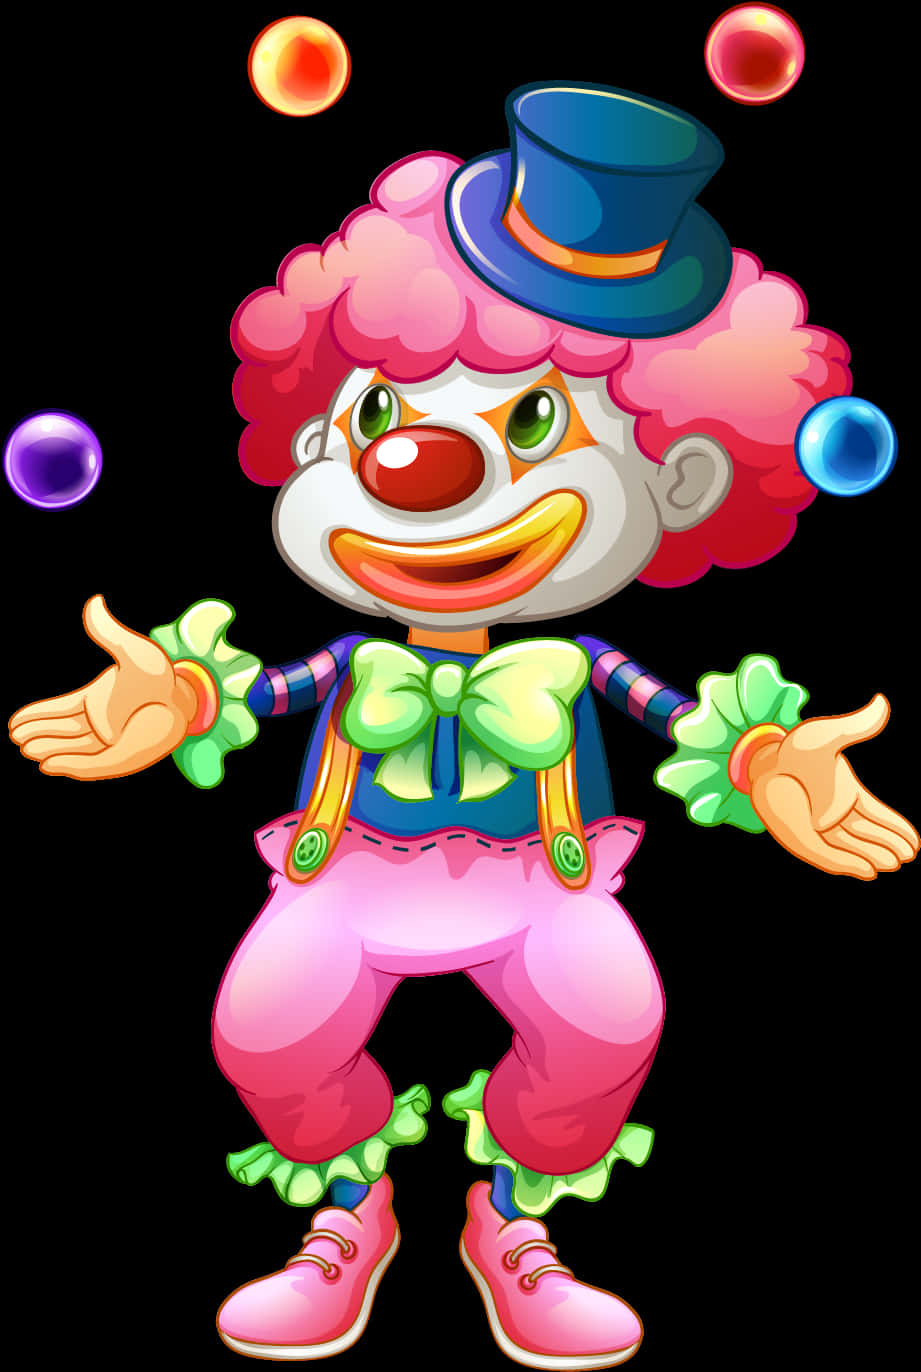 A Cartoon Clown Juggling Balls